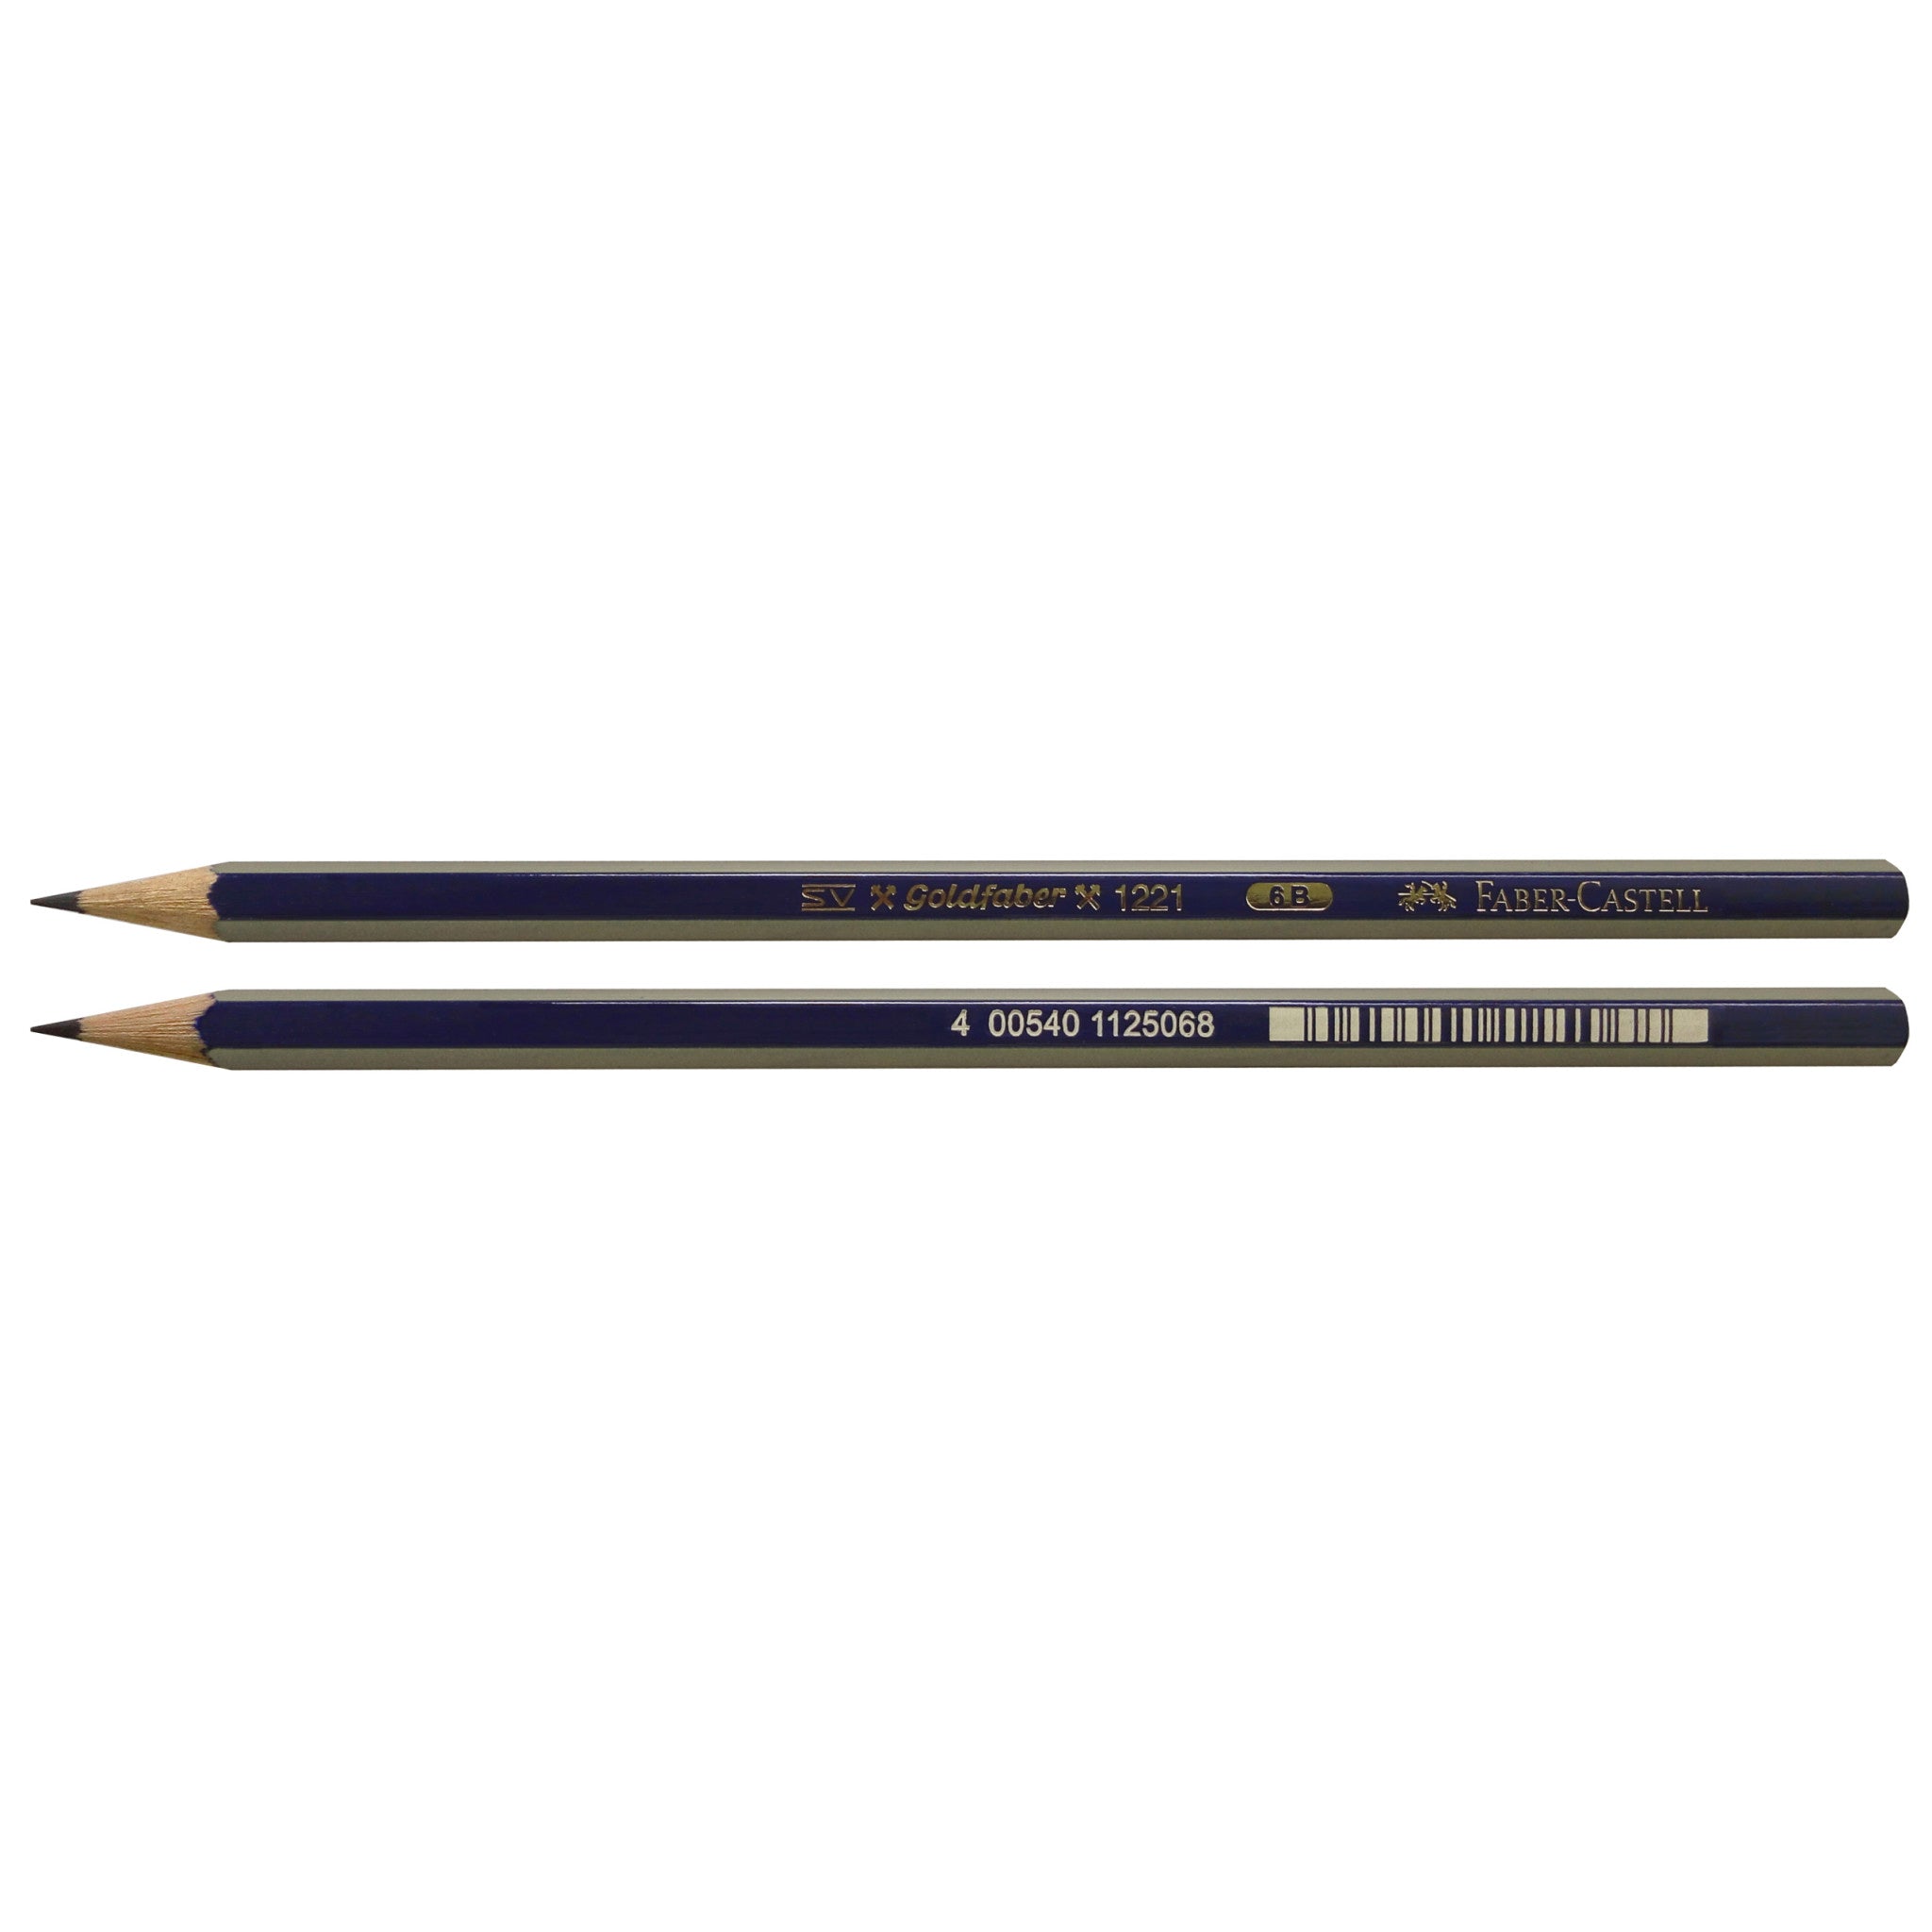 6b pencil lead